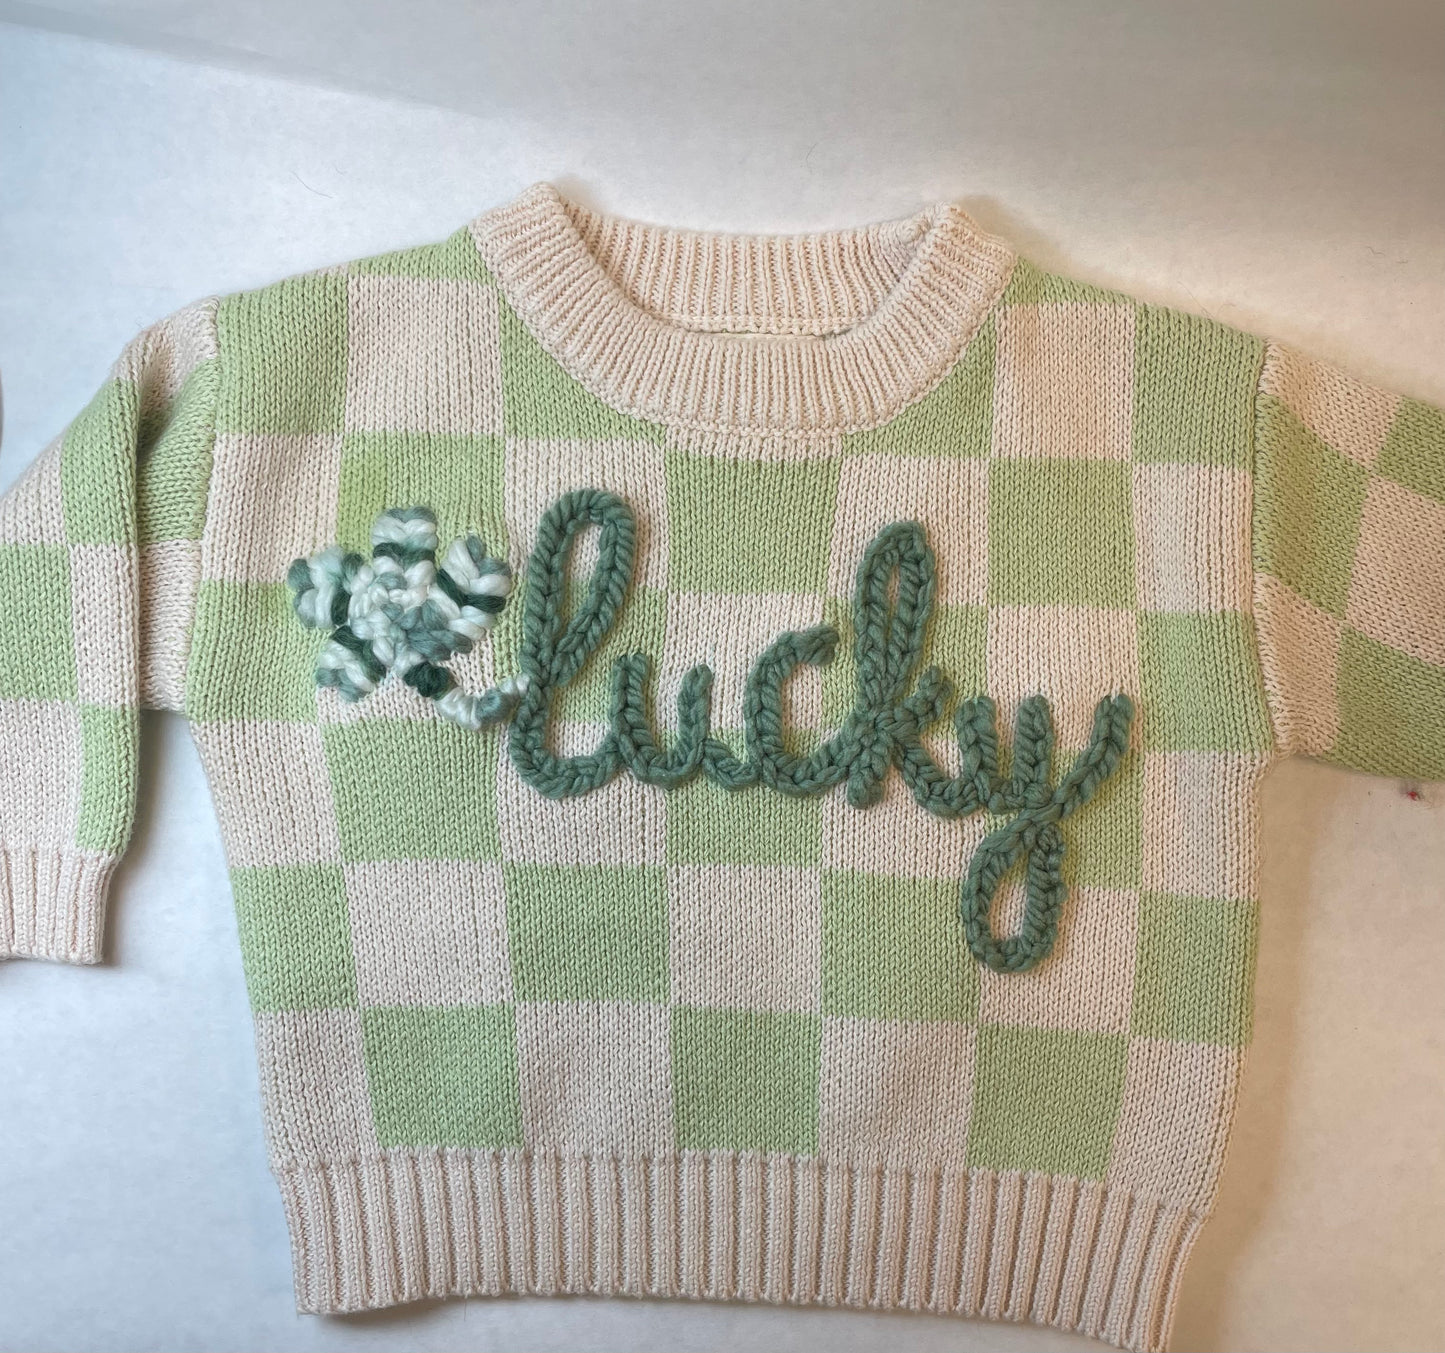 Lucky Sweater